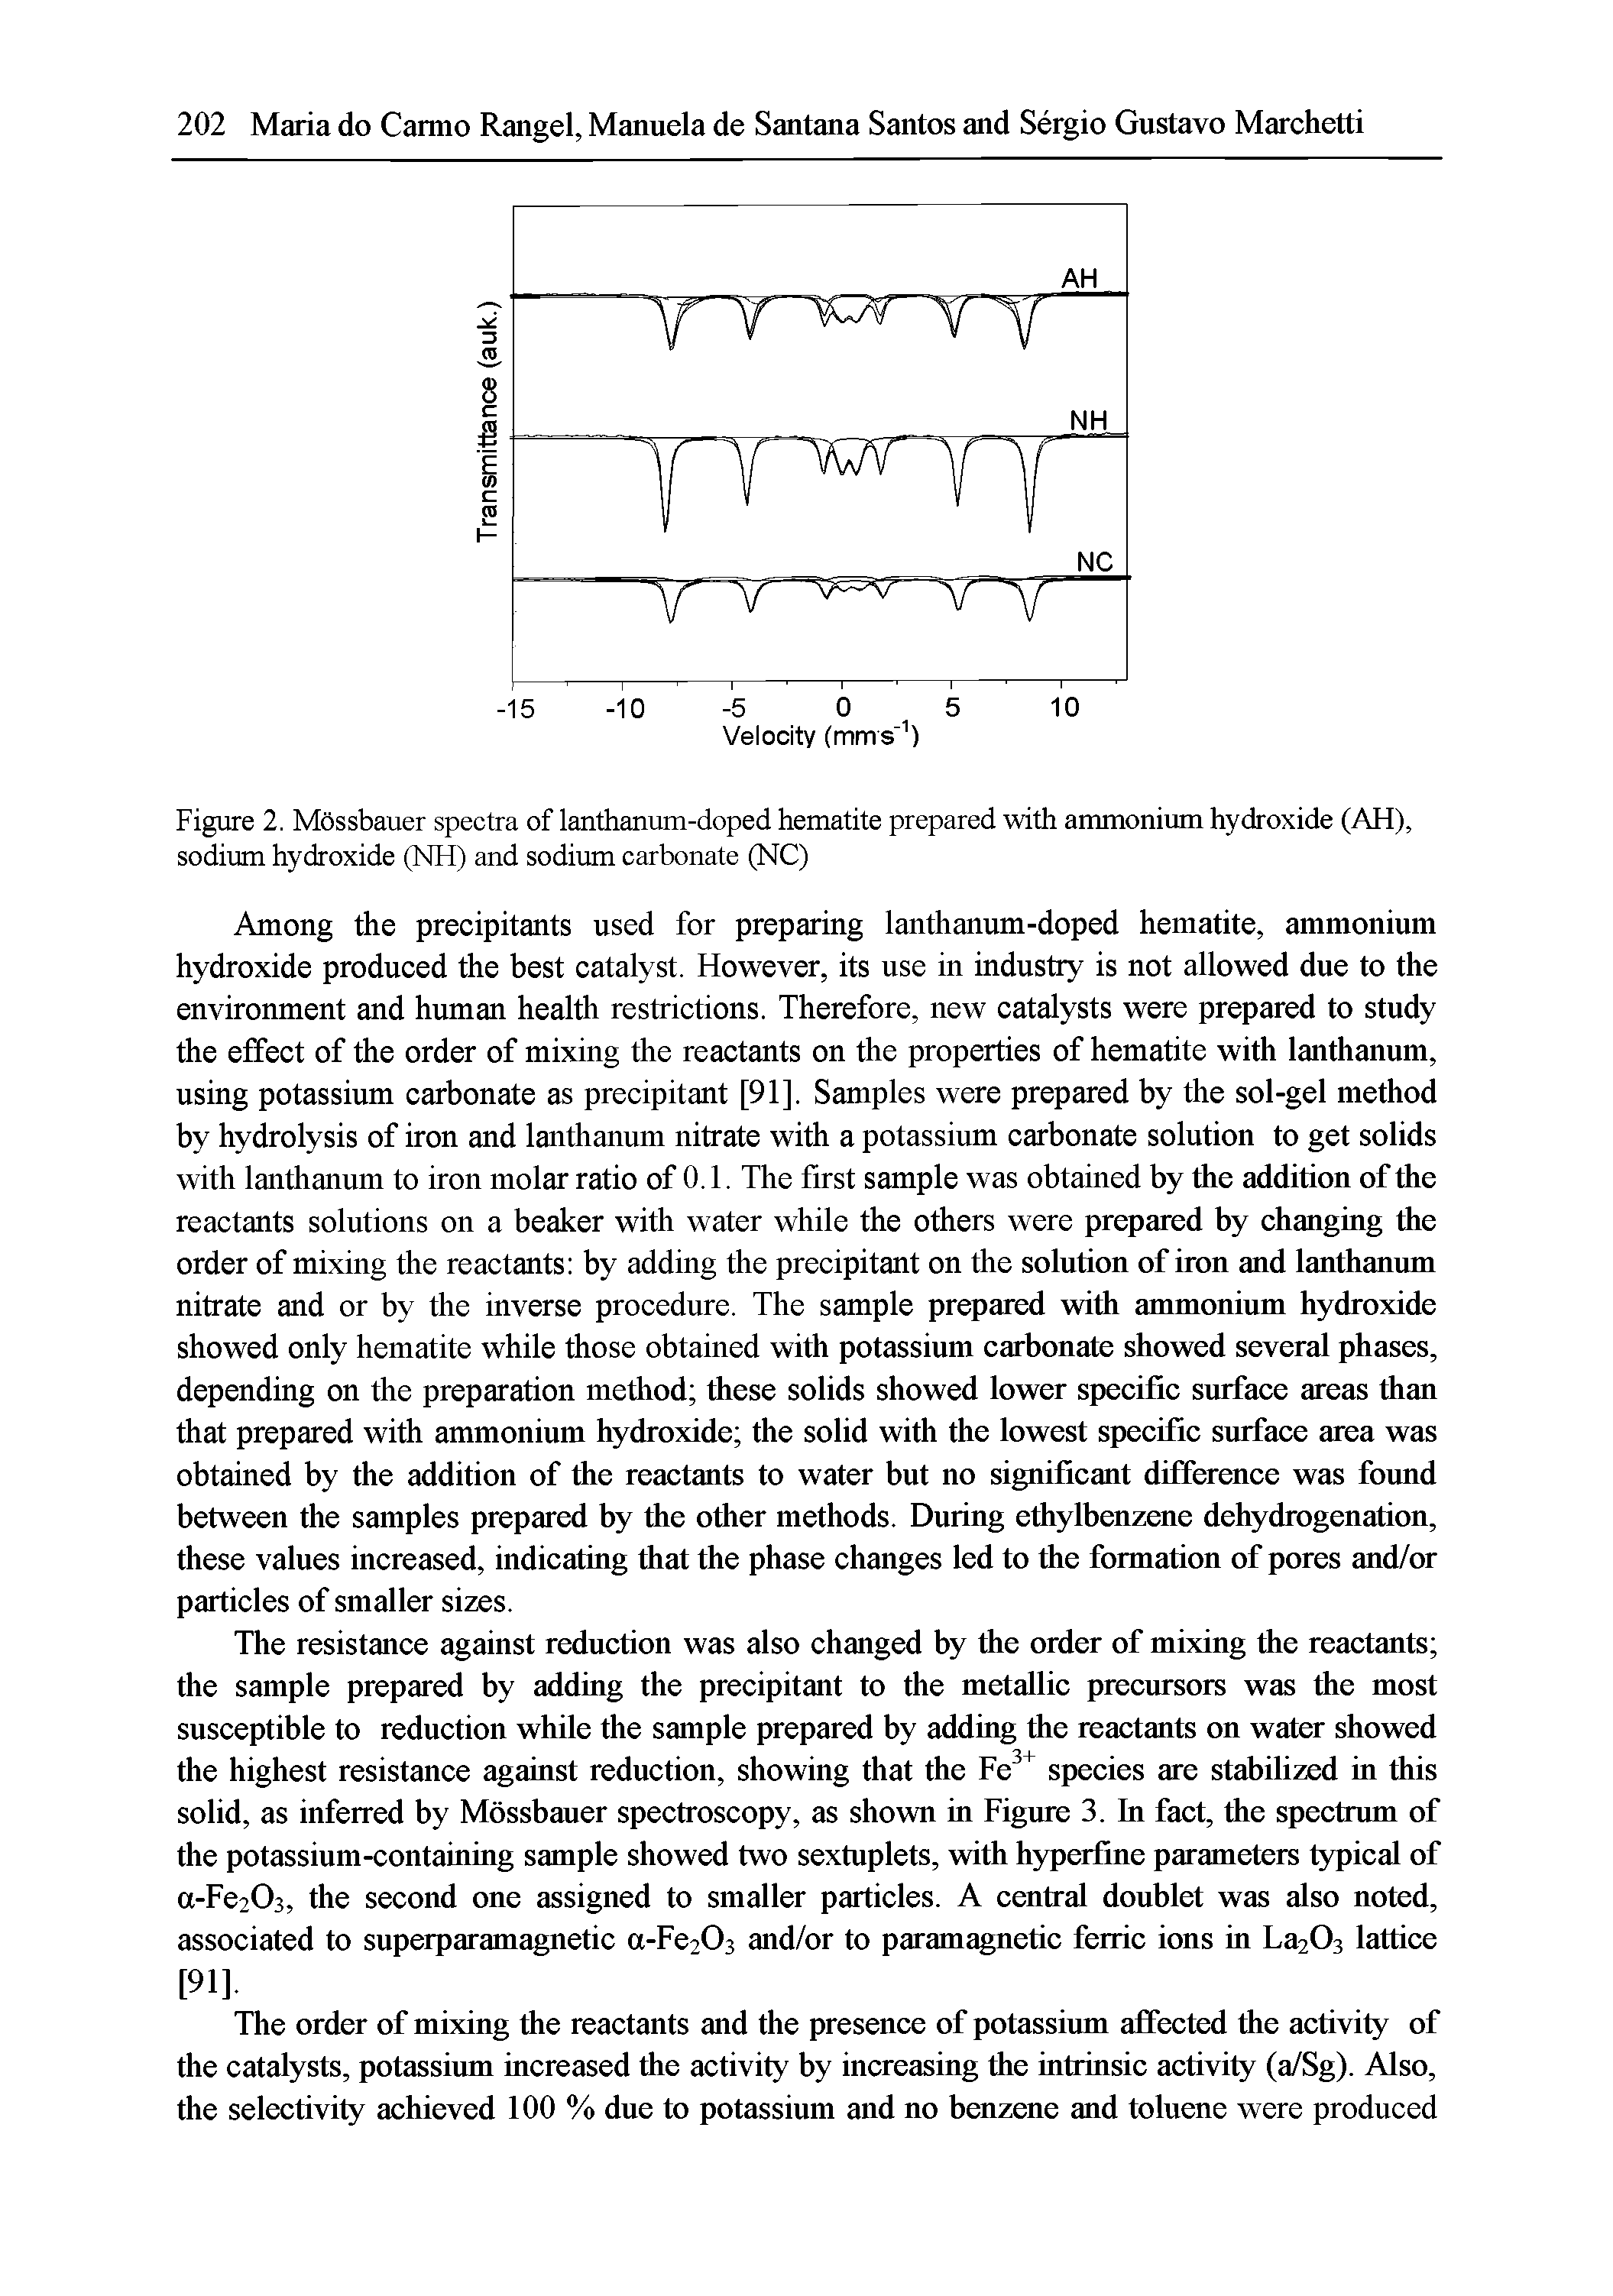 Figure 2. Mossbauer spectra of lanthanum-doped hematite prepared witli ammonium hydroxide (AH), sodium hydroxide (NH) and sodium carbonate (NC)...